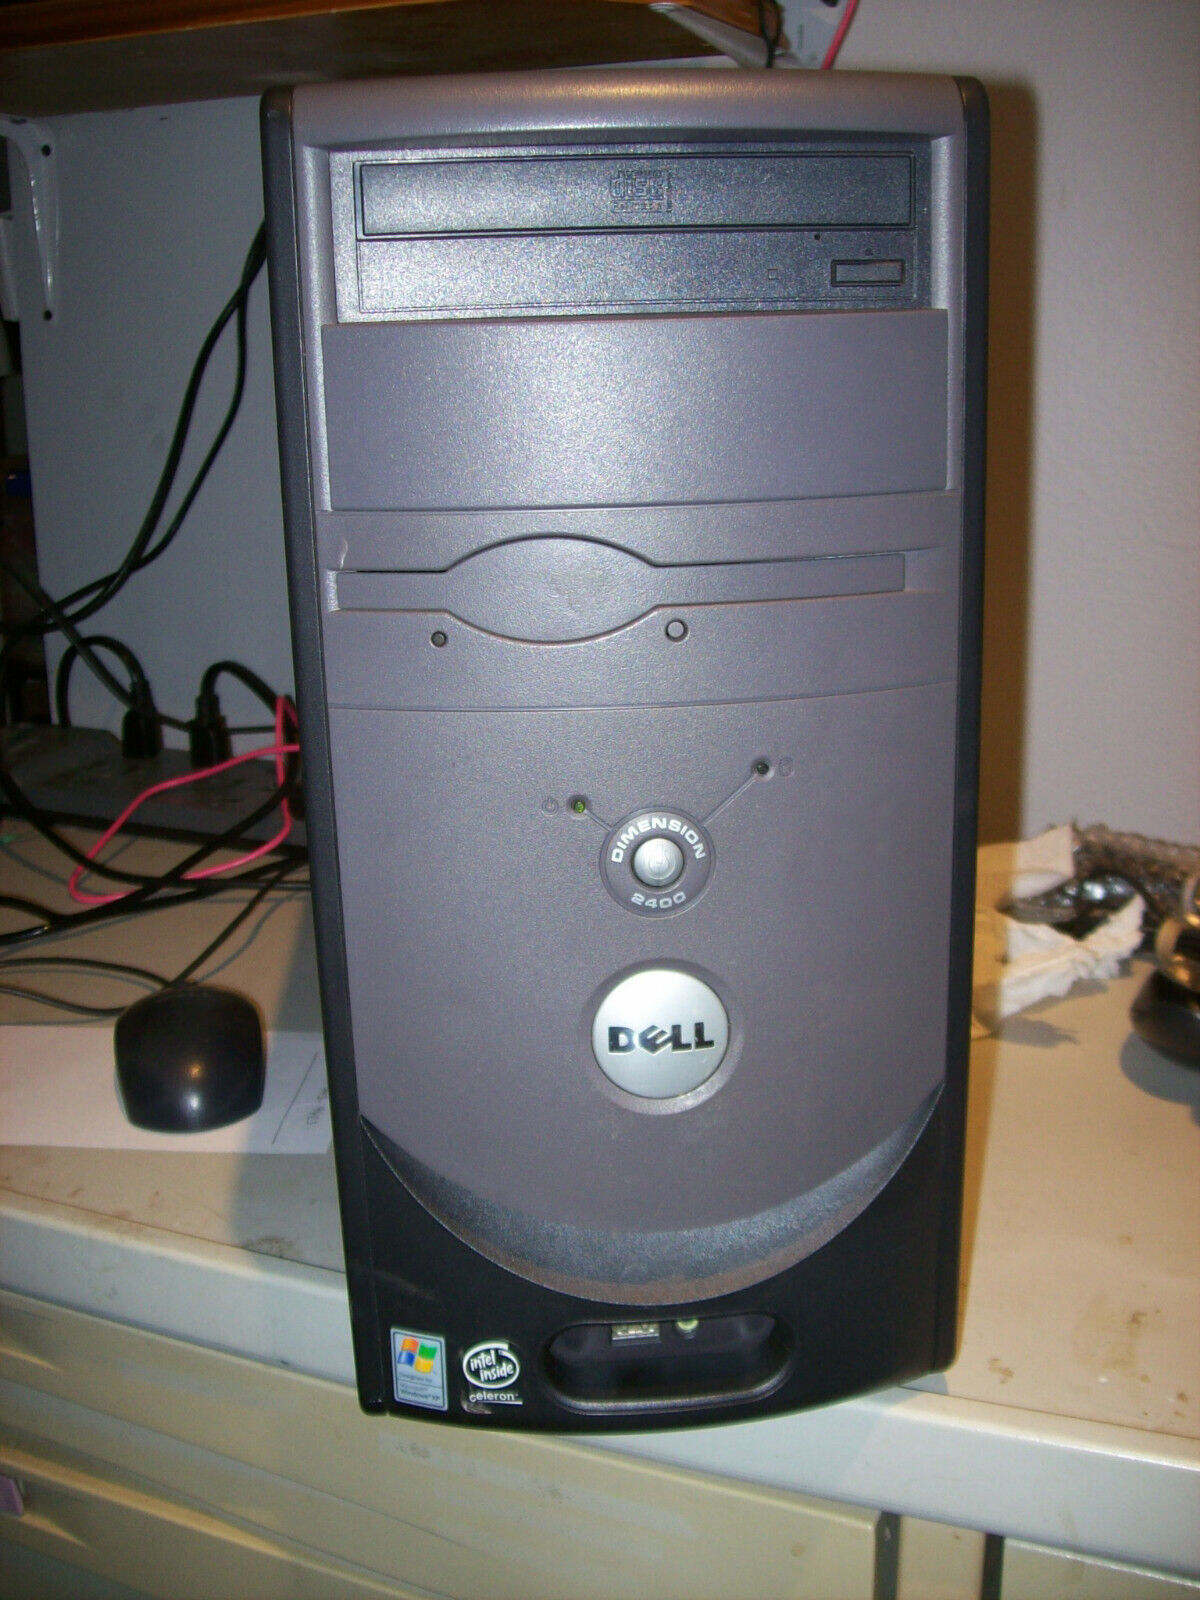 Dell Dimension 2400 Desktop Tower PC 2.6 GHz 1 Gb Ram, 75 Gb Hdd FULLY SERVICED - $289.90